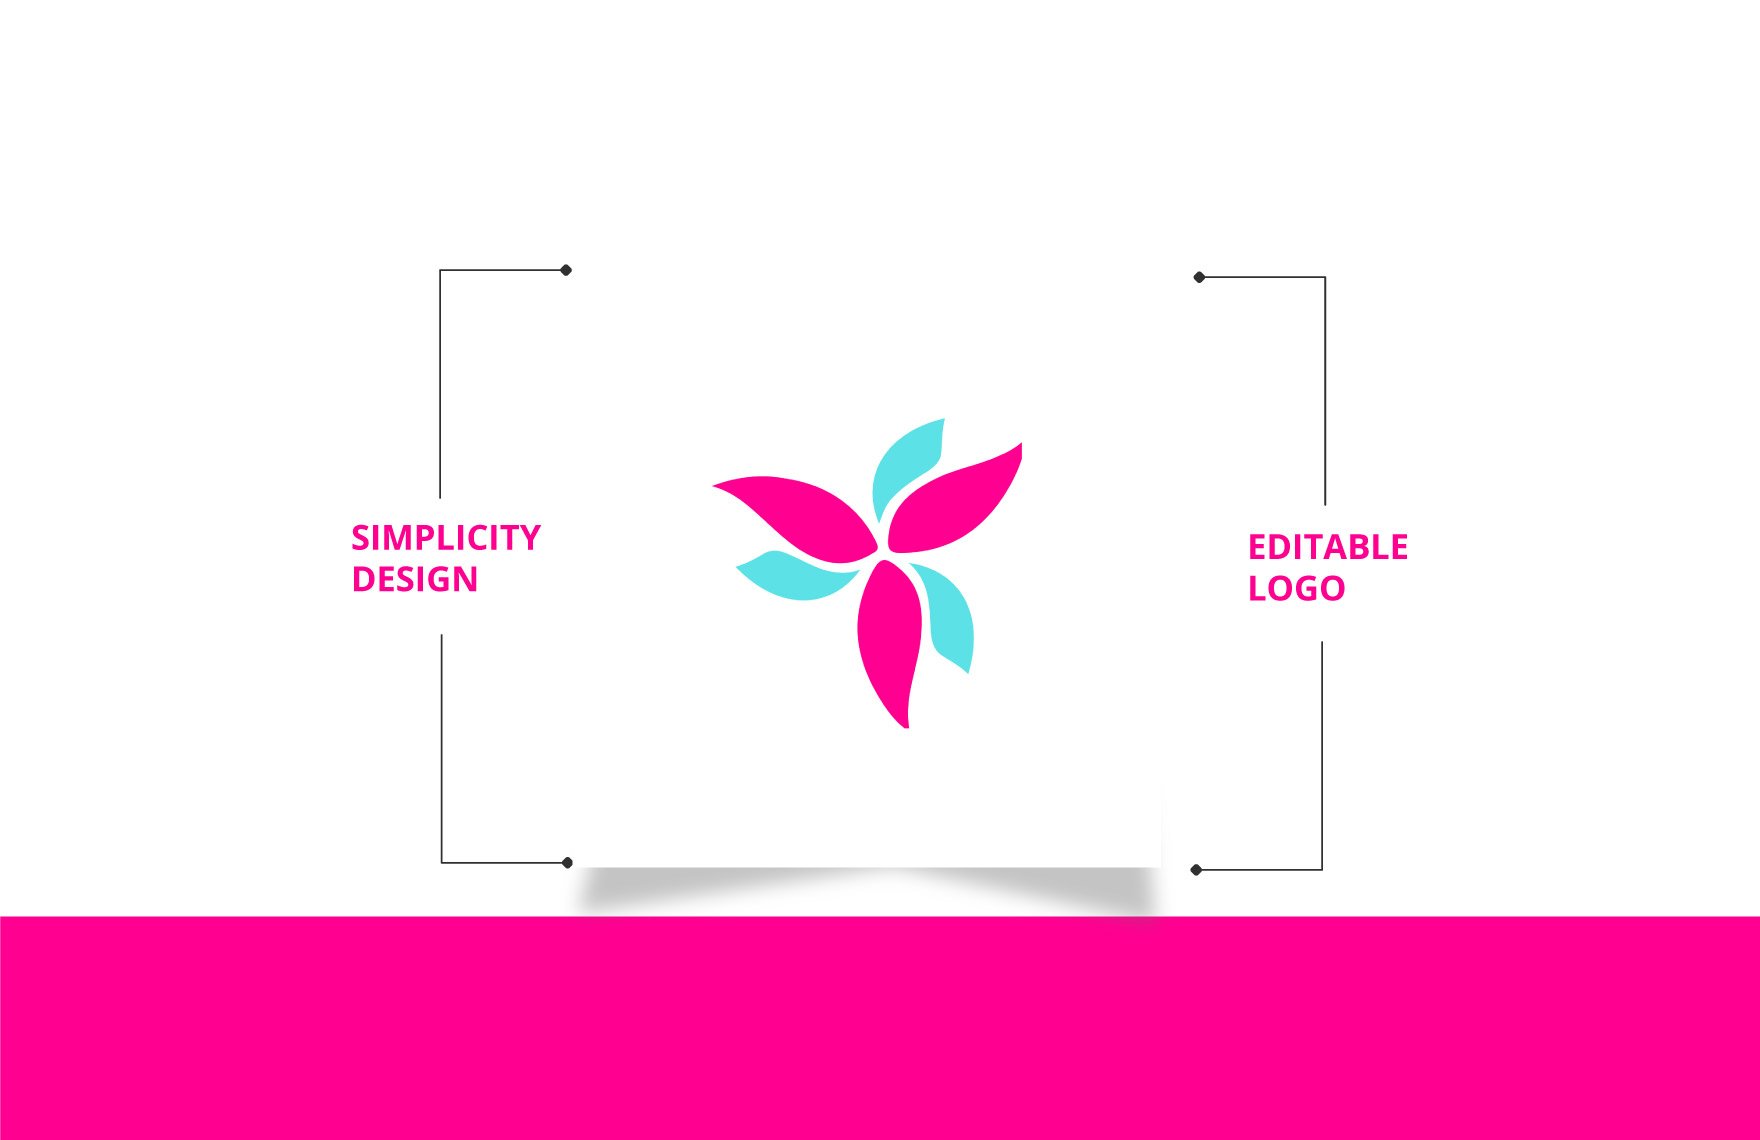 Flowers Logo Template